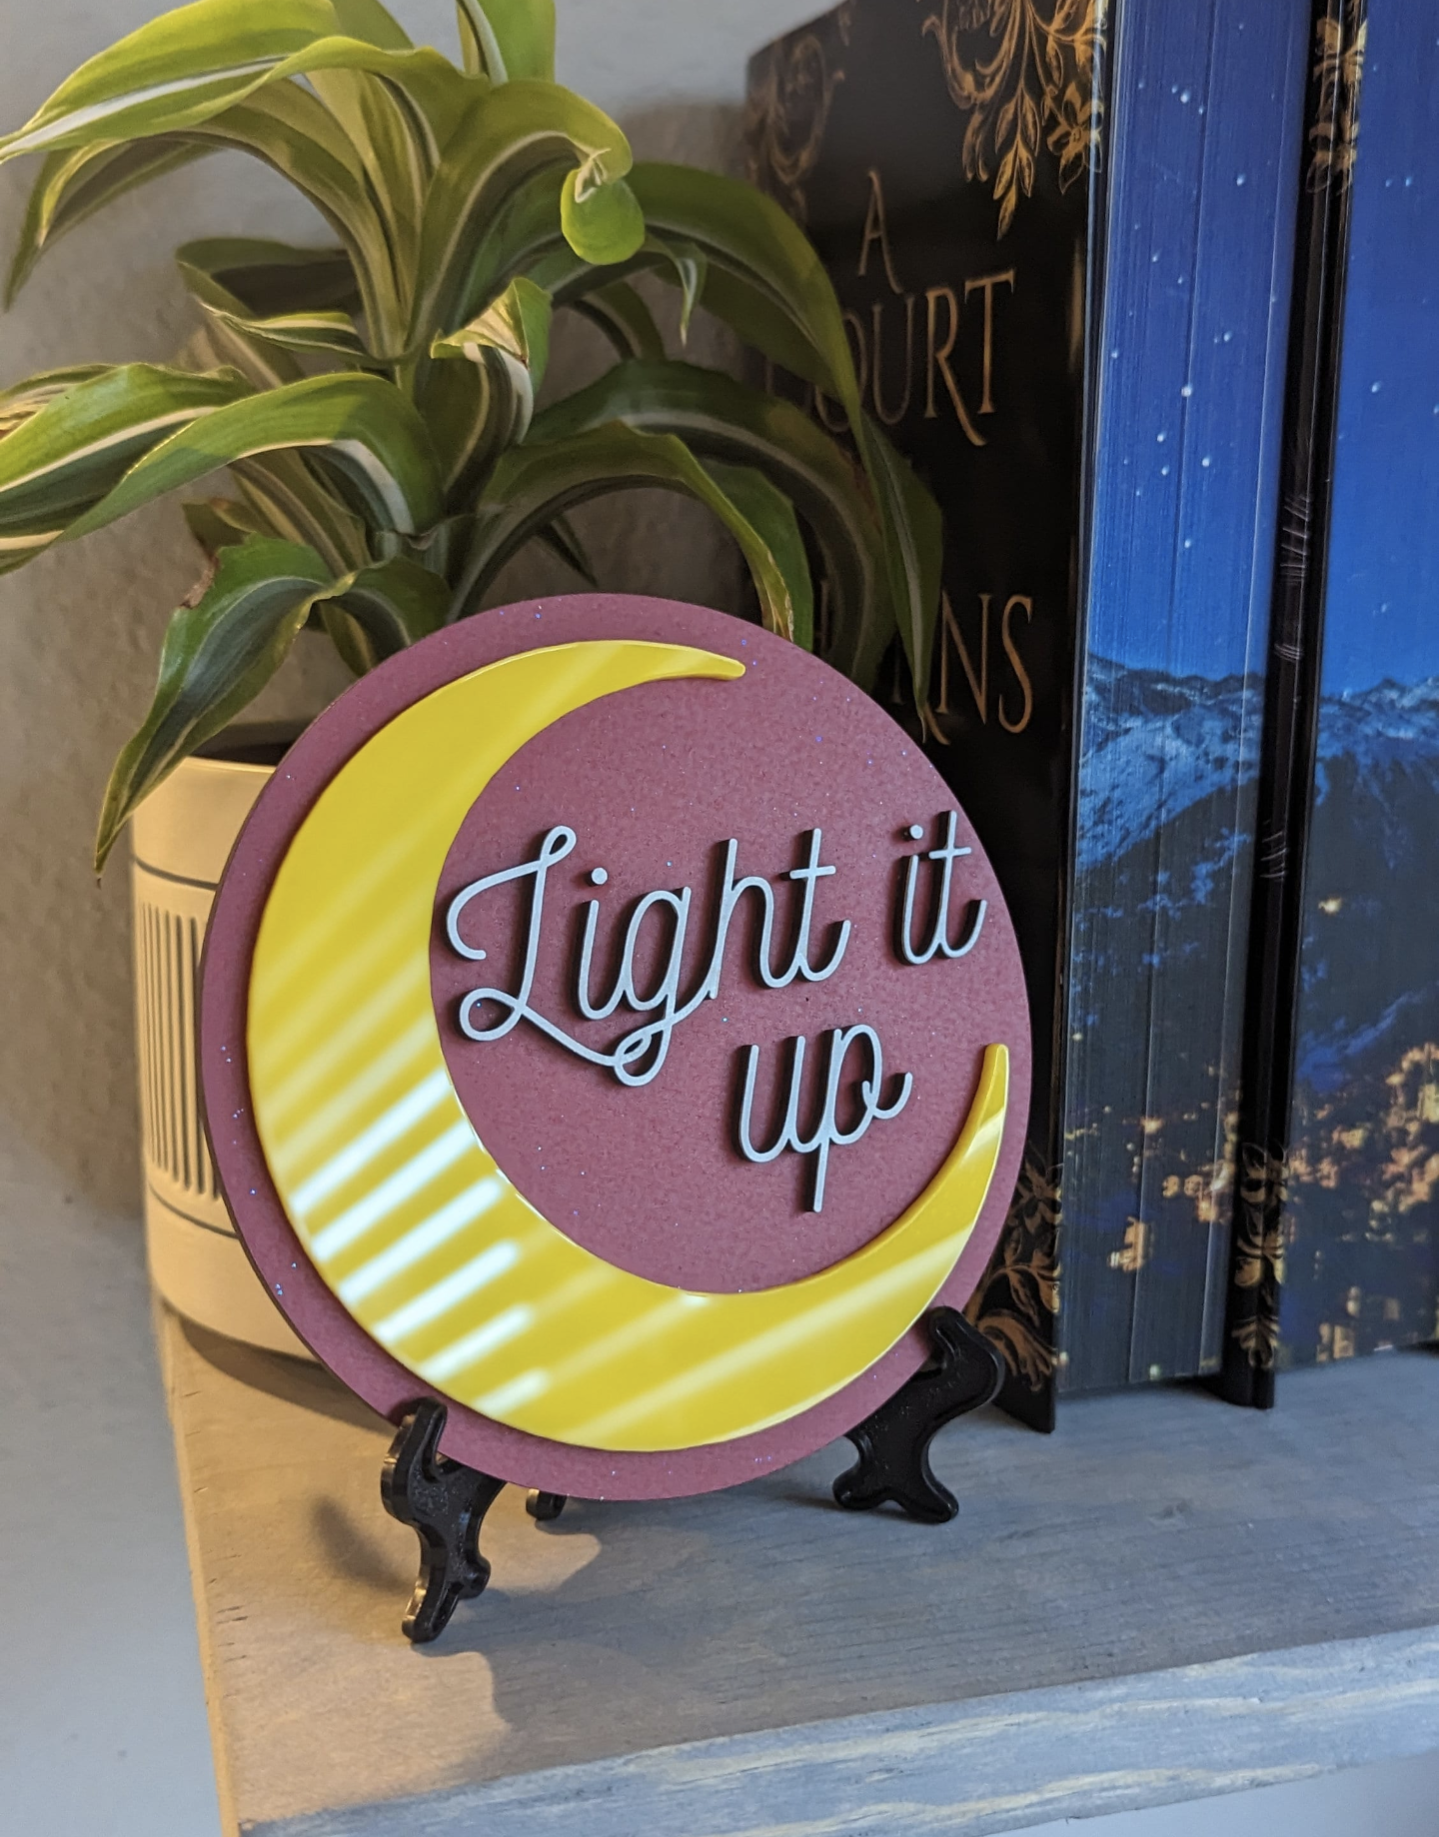 Light it up | Licensed Crescent City Bookshelf Sign - Quill & Cauldron